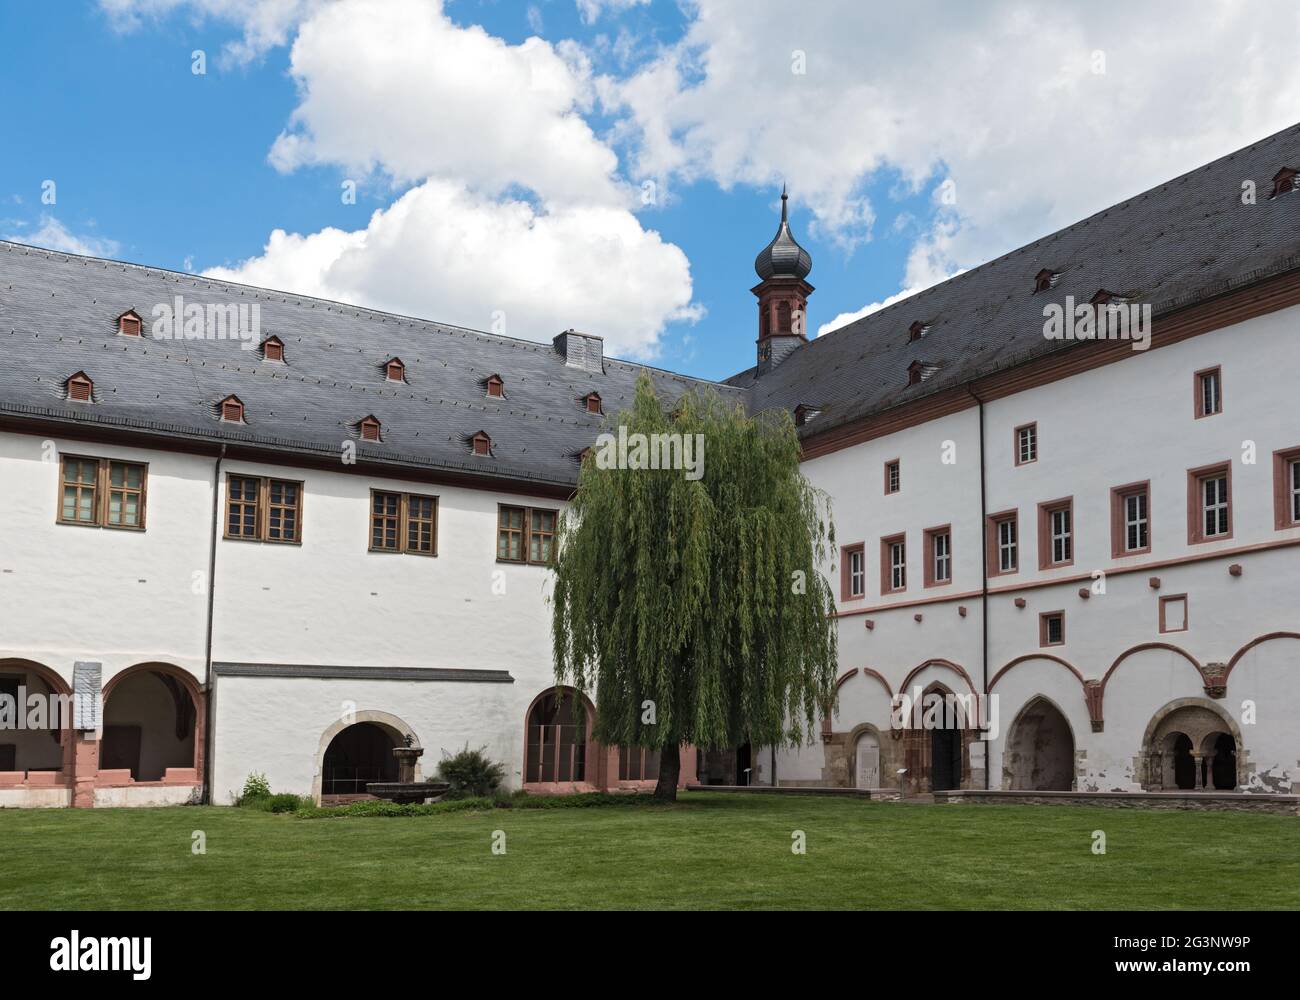 The famous monastery eberbach near eltville hesse germany Stock Photo